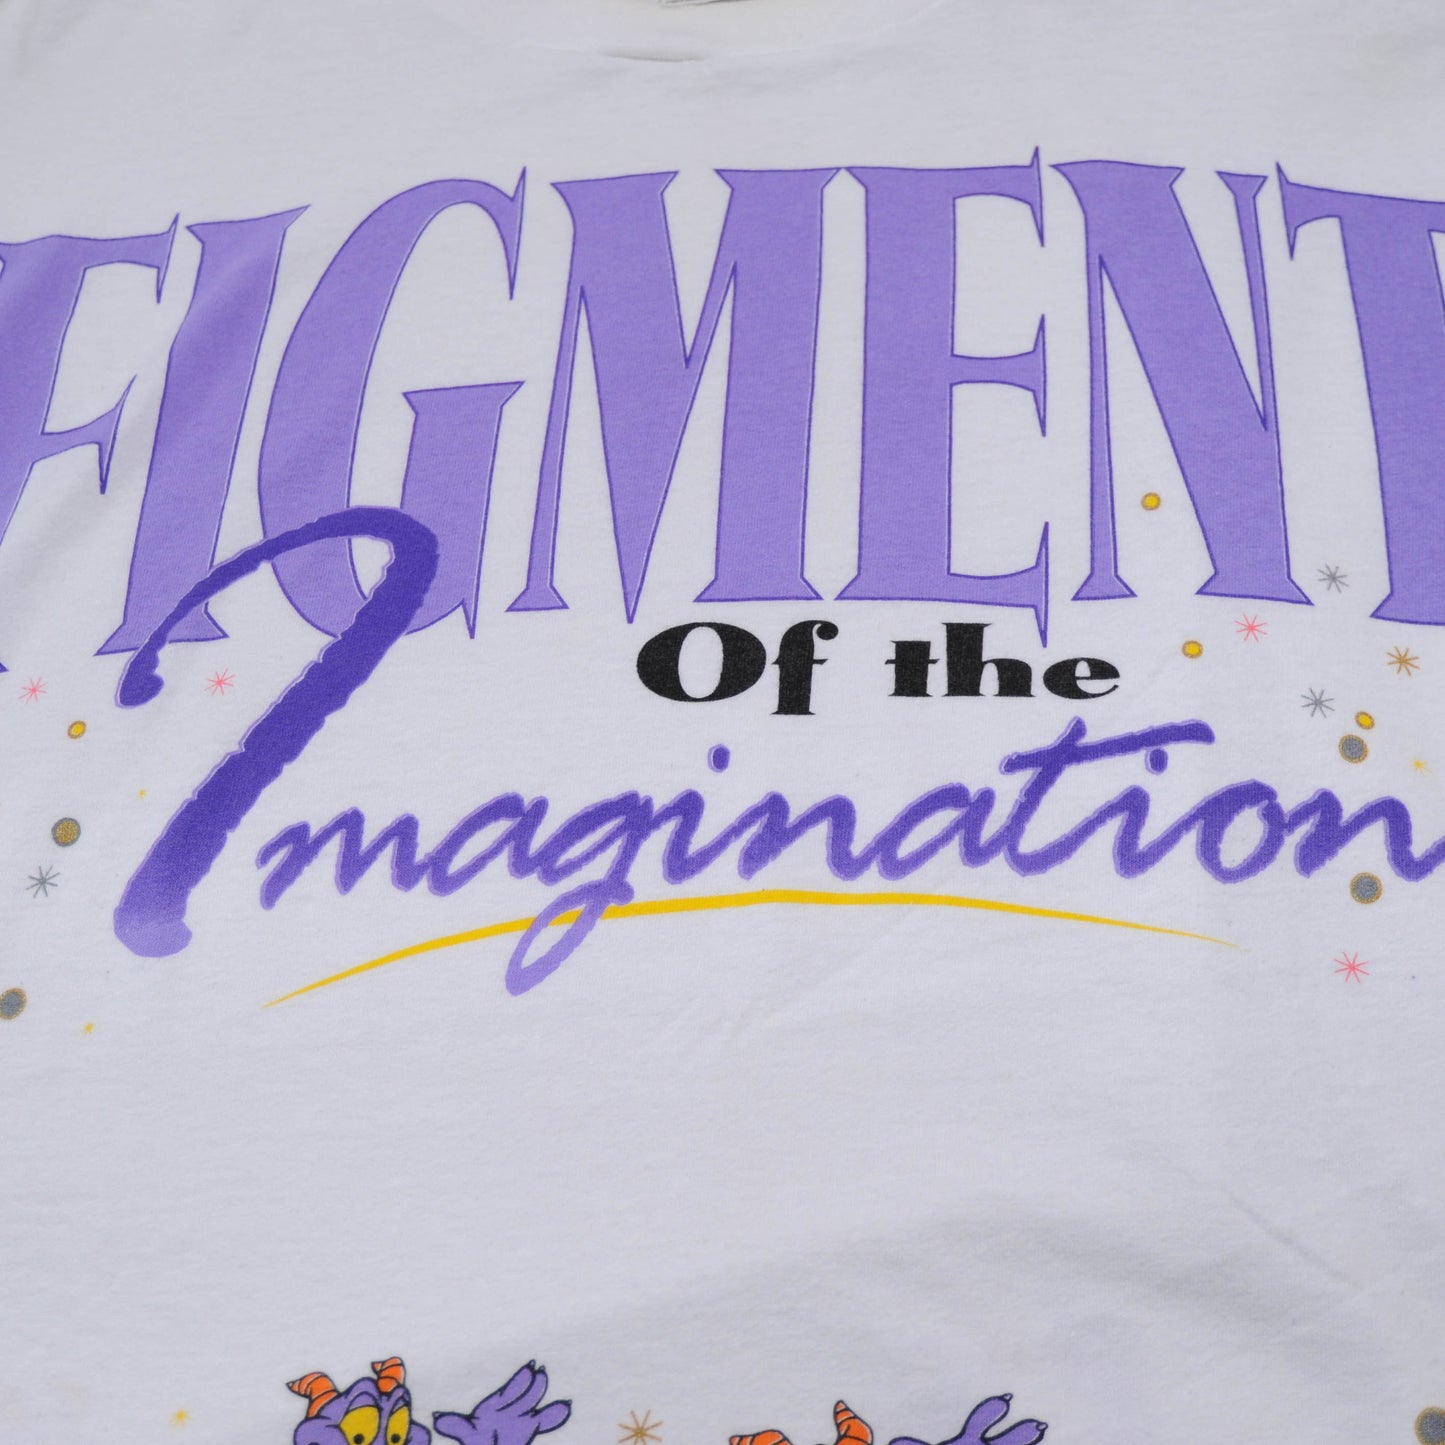 90's DISNEY FIGMENT of the imagination Tシャツ 白(XXL)/A3072T-S